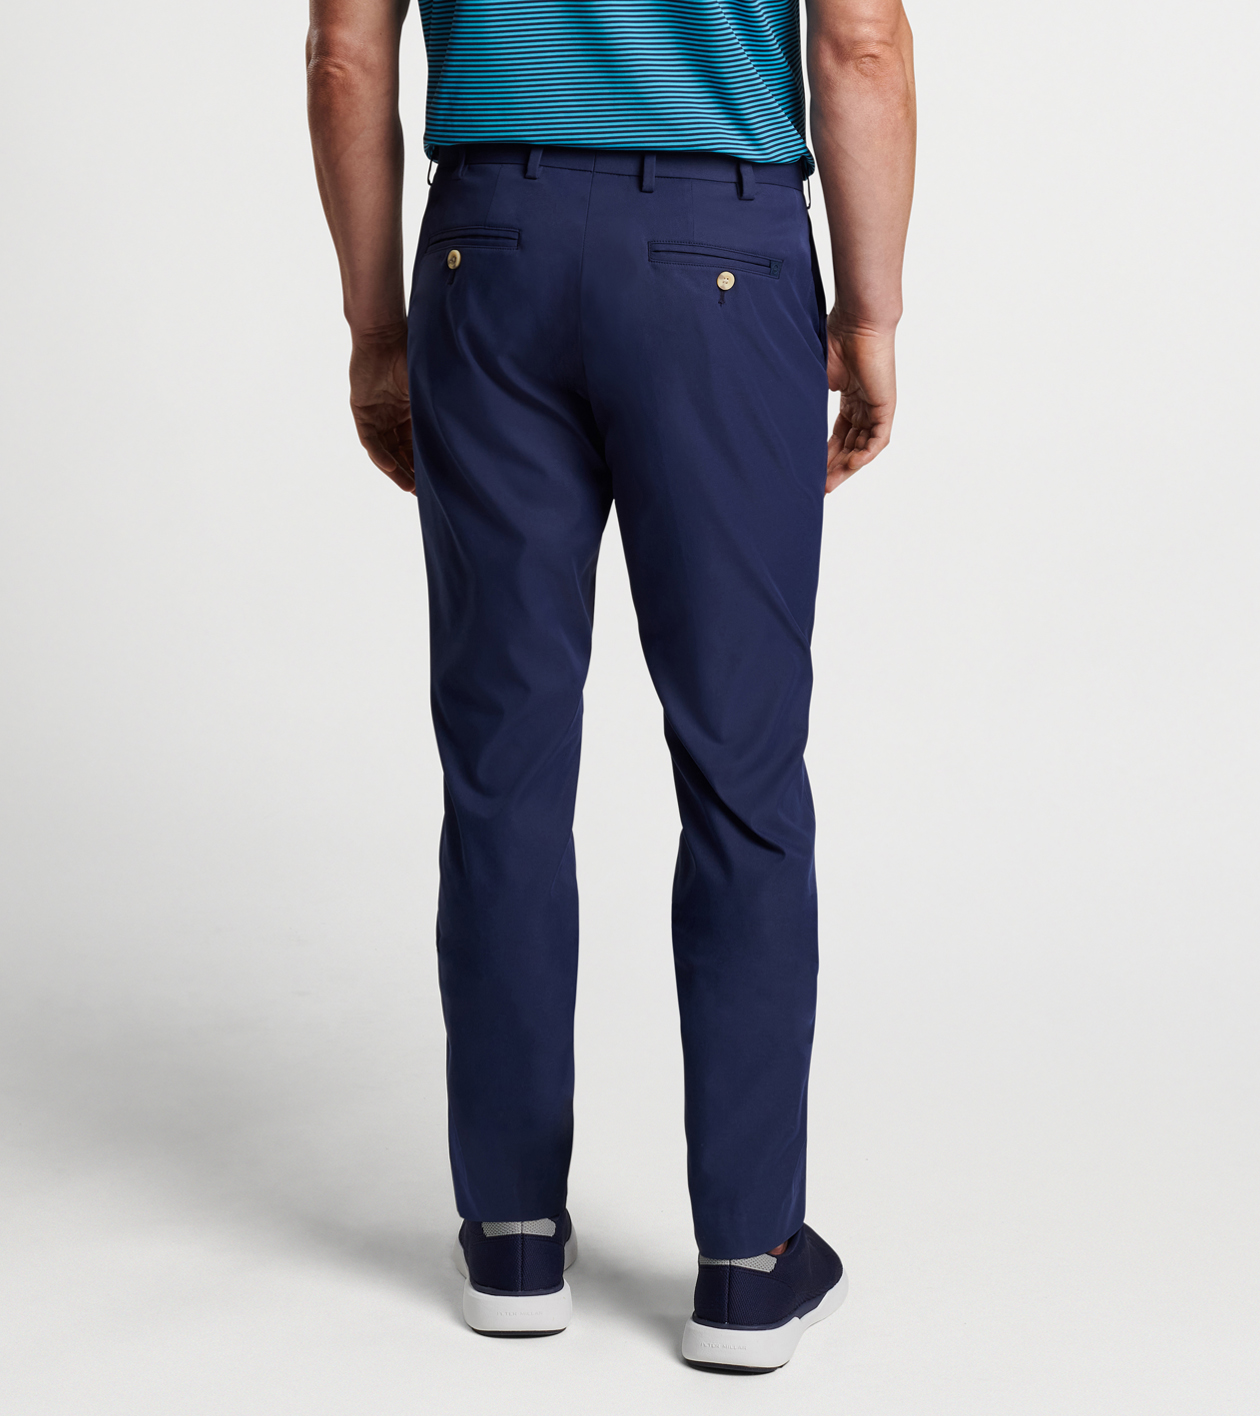 Peter Millar Light Tan 5 Pocket Cotton Golf Pants Size 32 Inseam 28